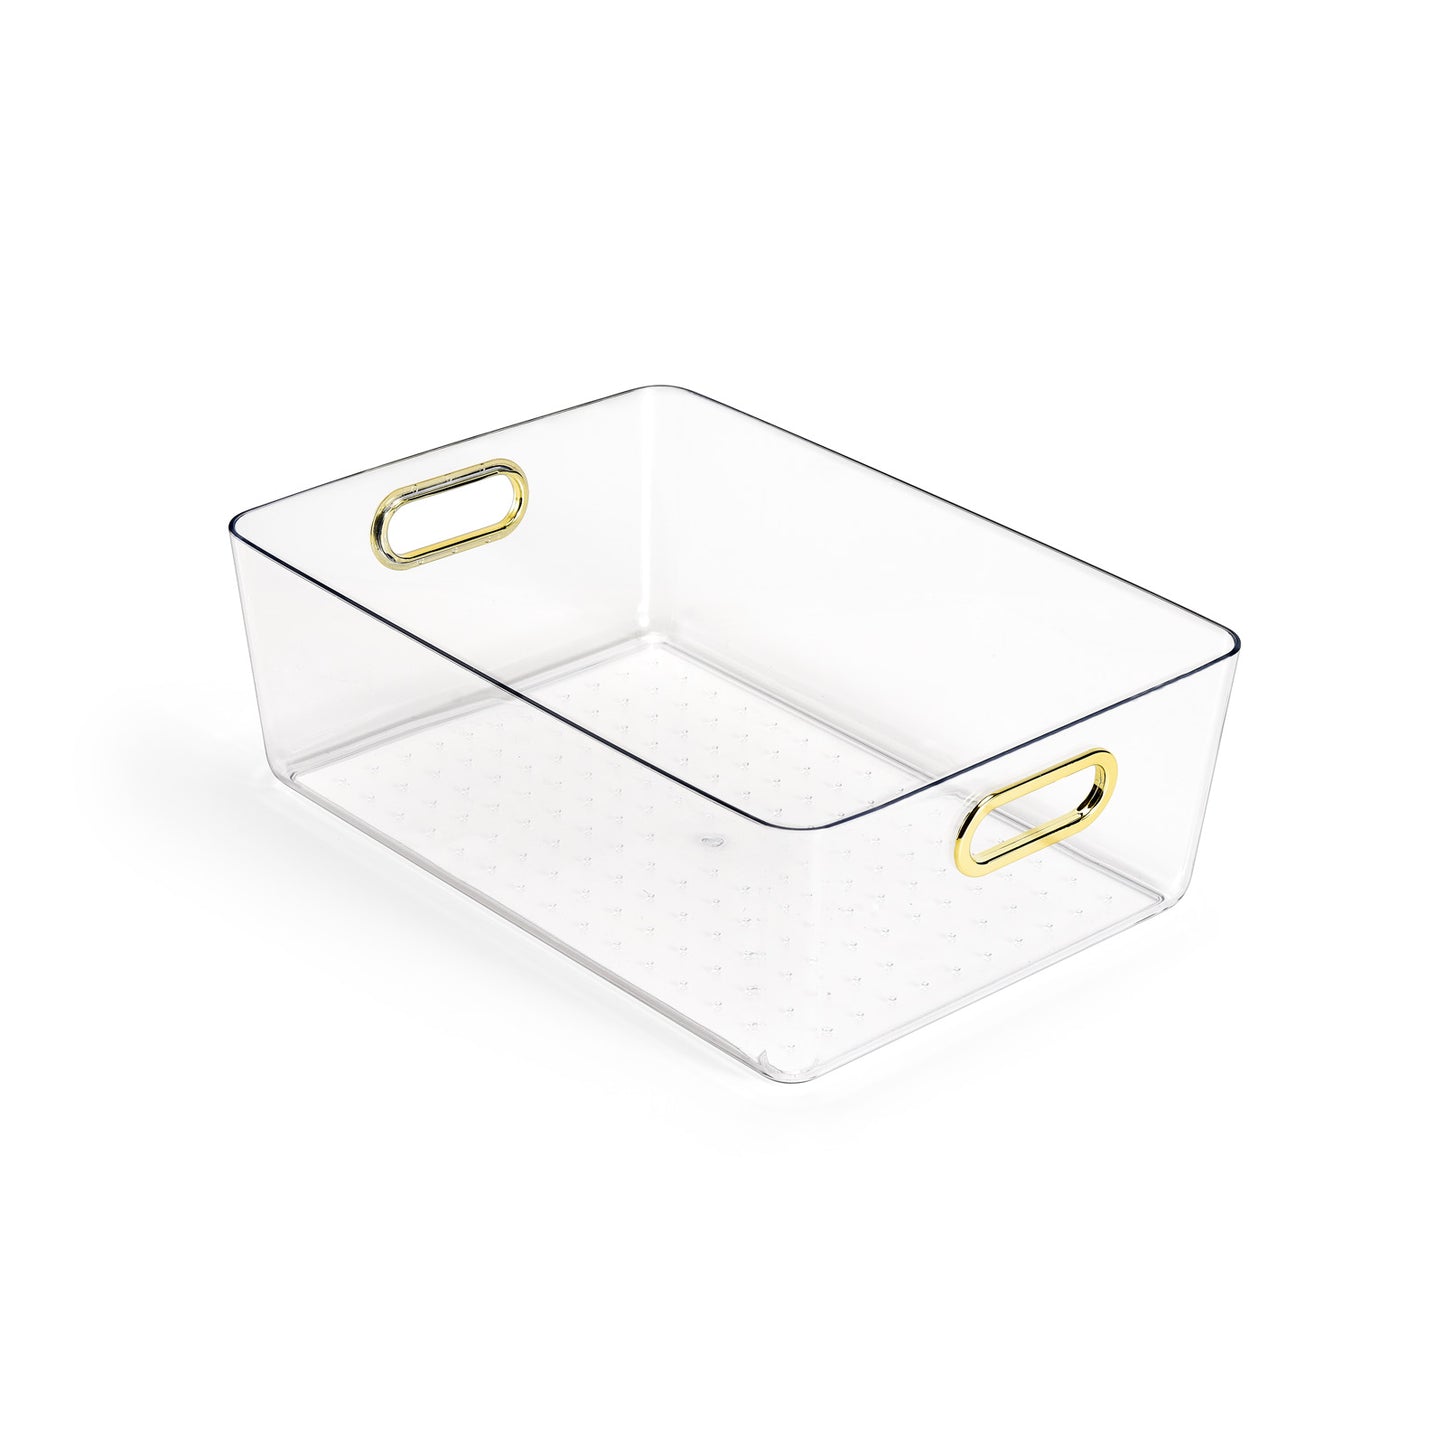 Multi Use Storage Bin With Gold Plated Handles - Medium